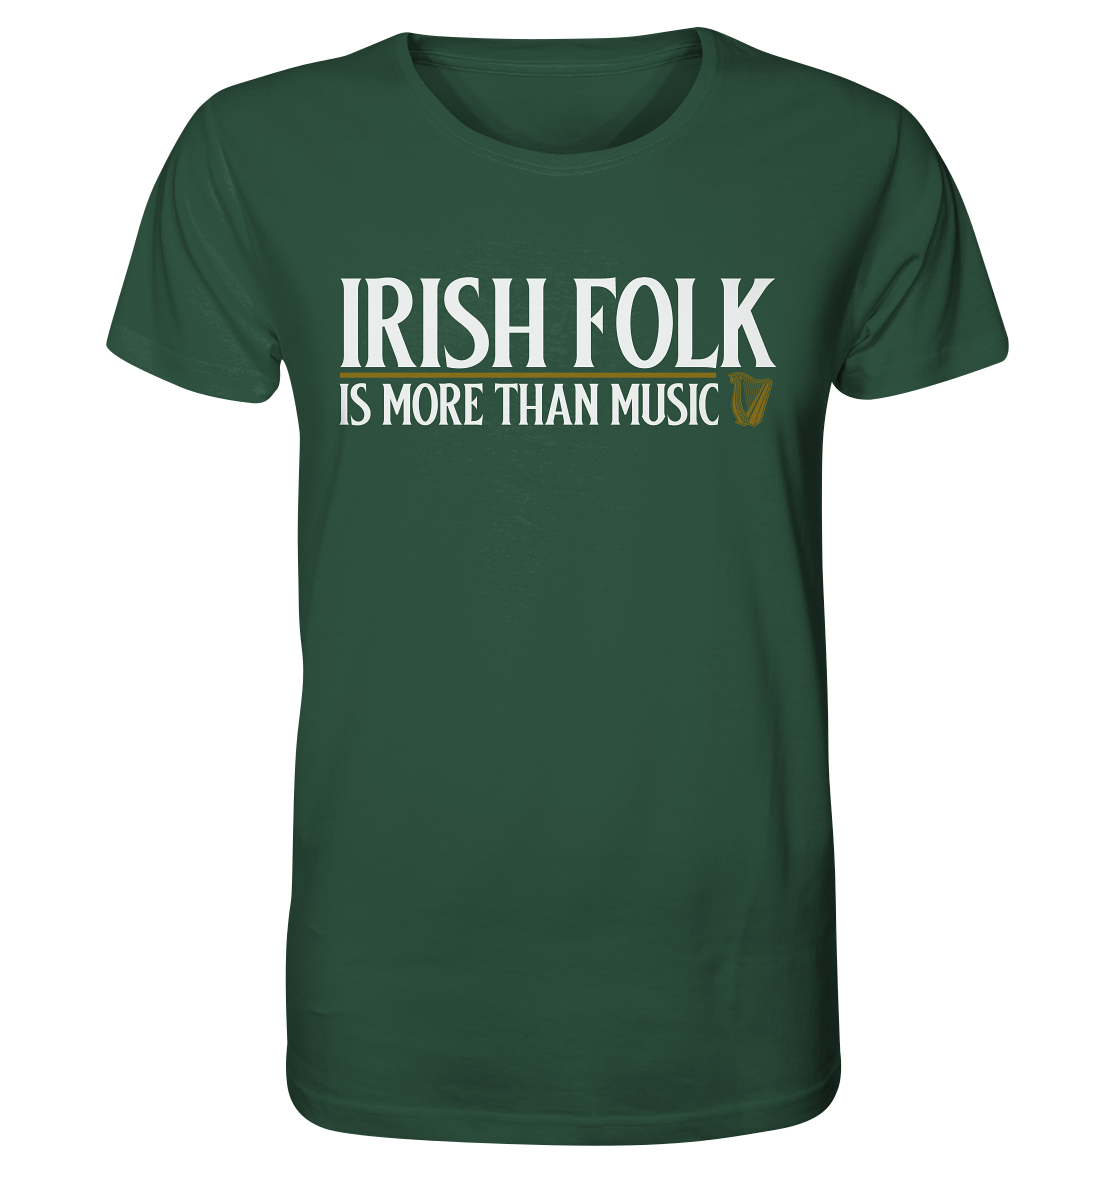 Irish Folk "Is More Than Music" - Organic Shirt